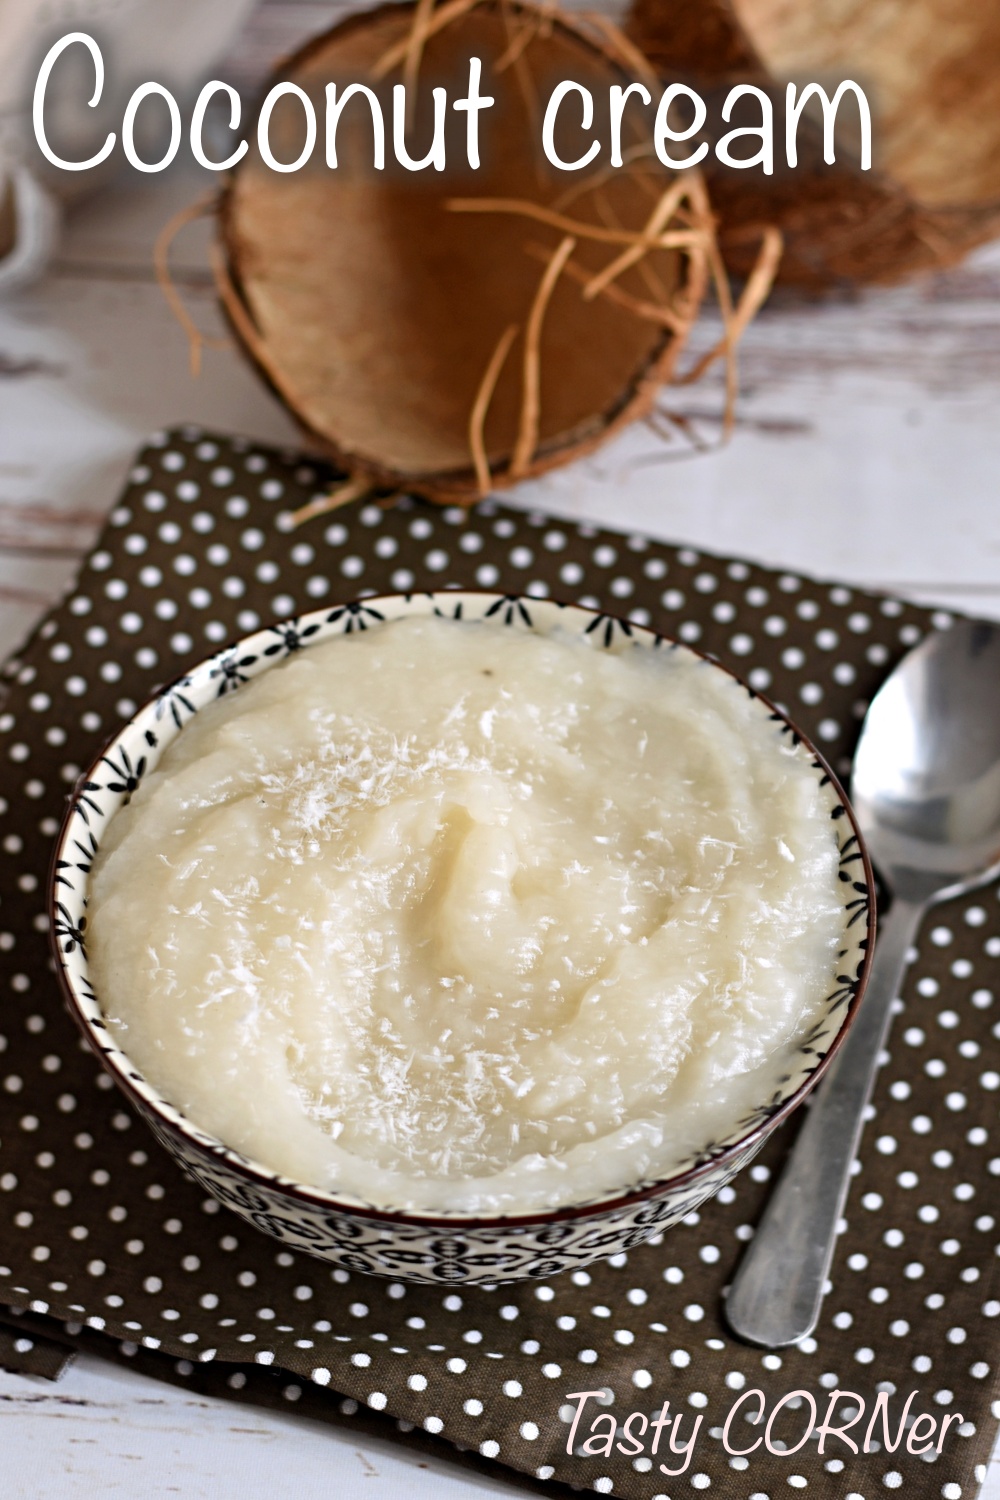 en_v_ homemade coconut cream easy and quick no eggs recipe vegan lactose-free dairy-free gluten-free tastycorner